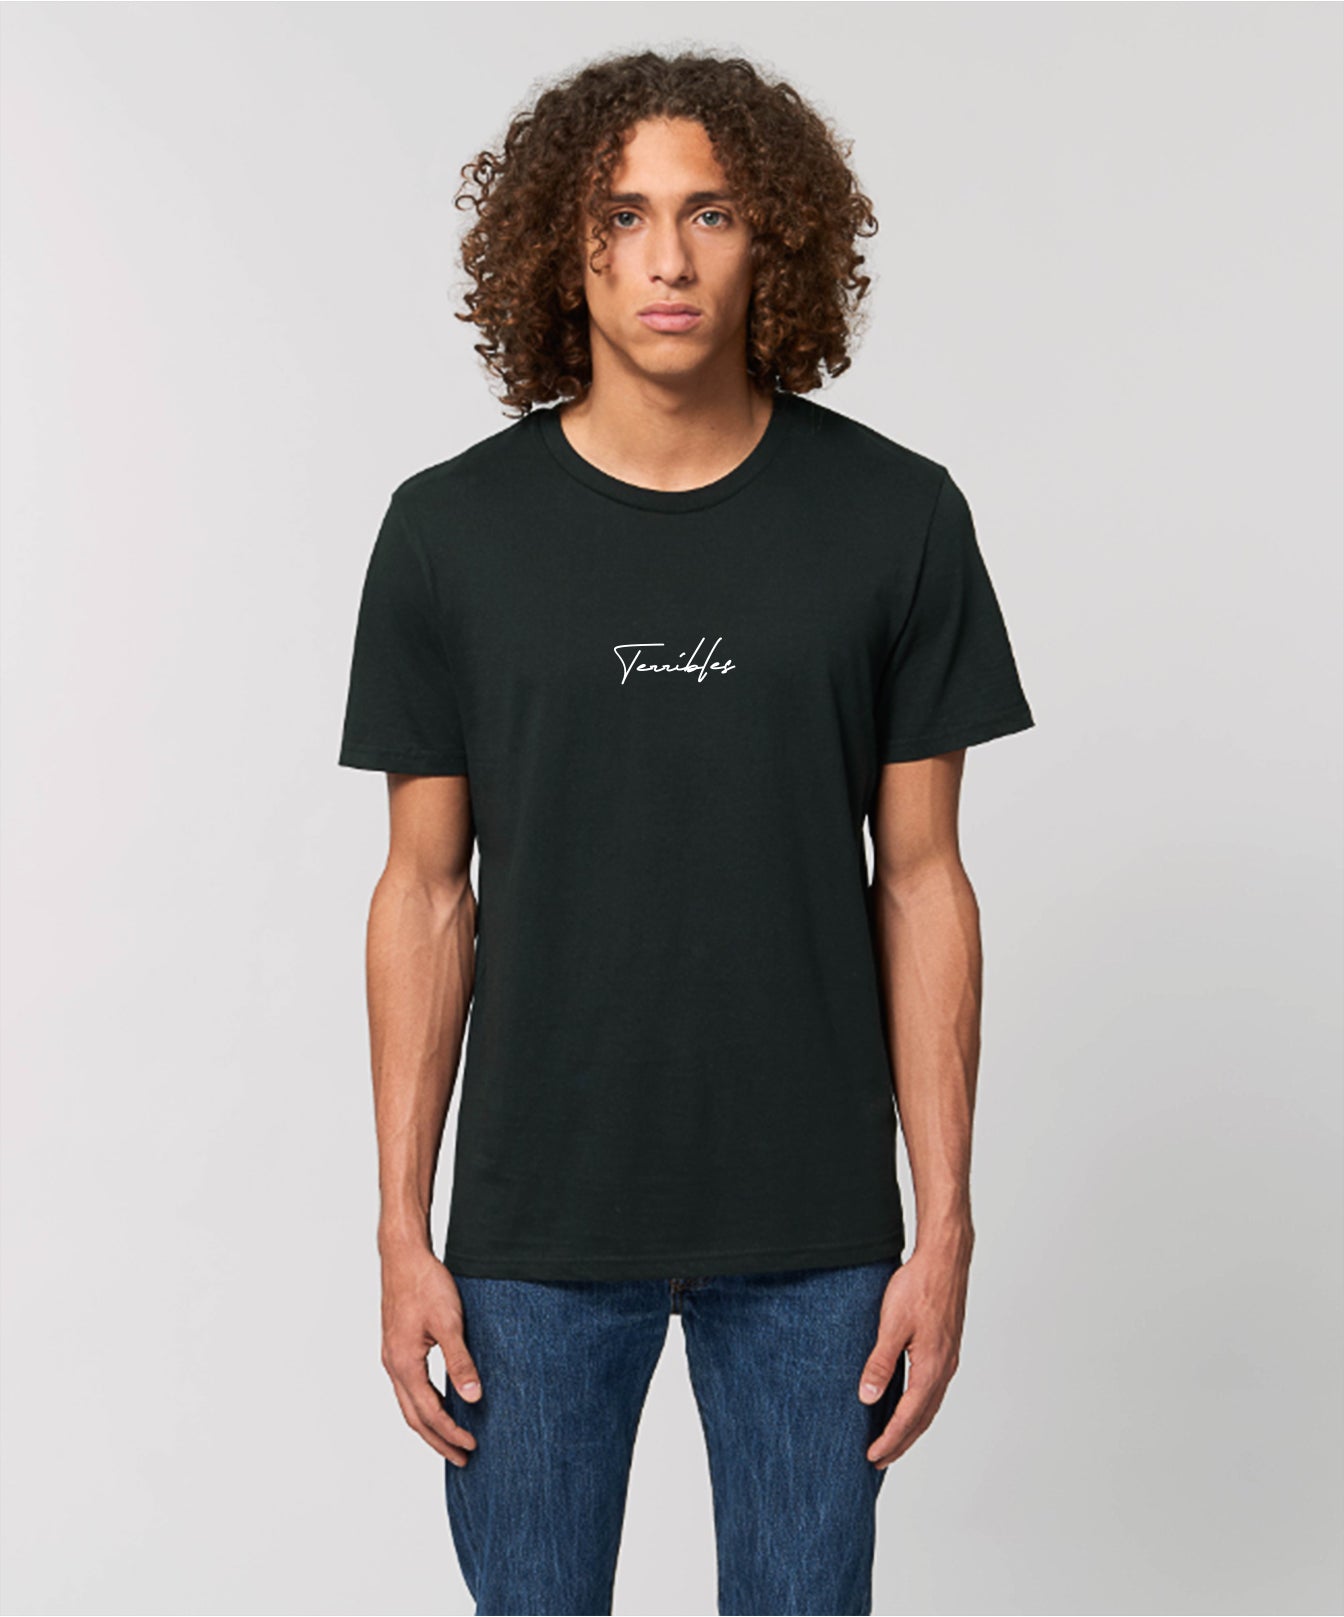 T-Shirt Unisexe Noir avec logo 'Terribles' Blanc - Terribles Nantais